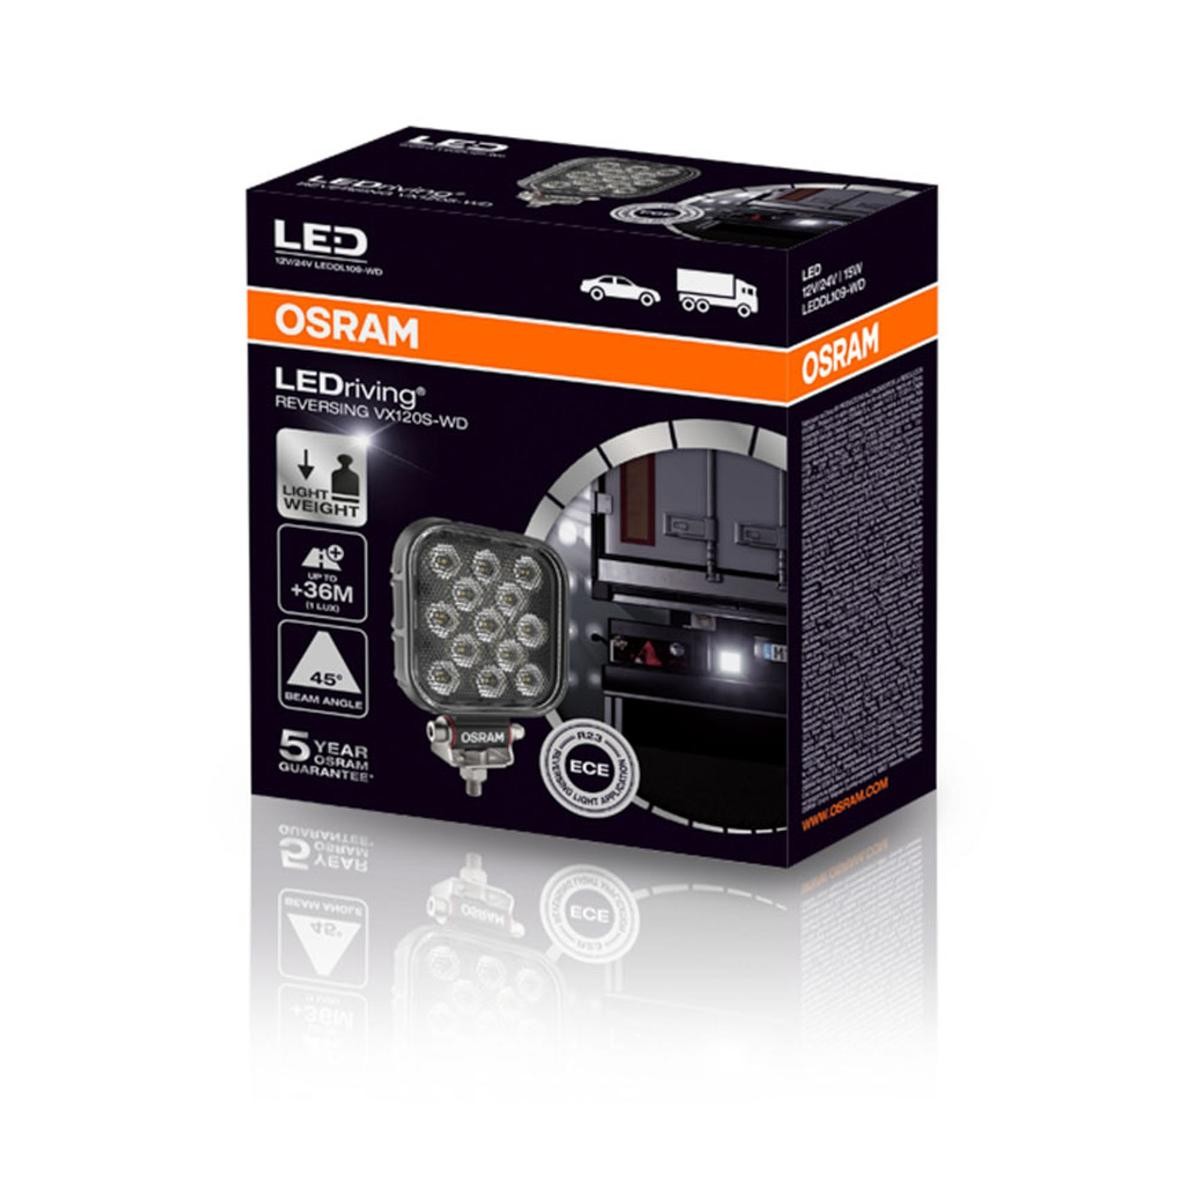 OSRAM LEDriving driving lights - Value Series LEDDL109WD Reverse lamp Fiat 500 L 1.6 D Multijet 105 hp Diesel 2014 price